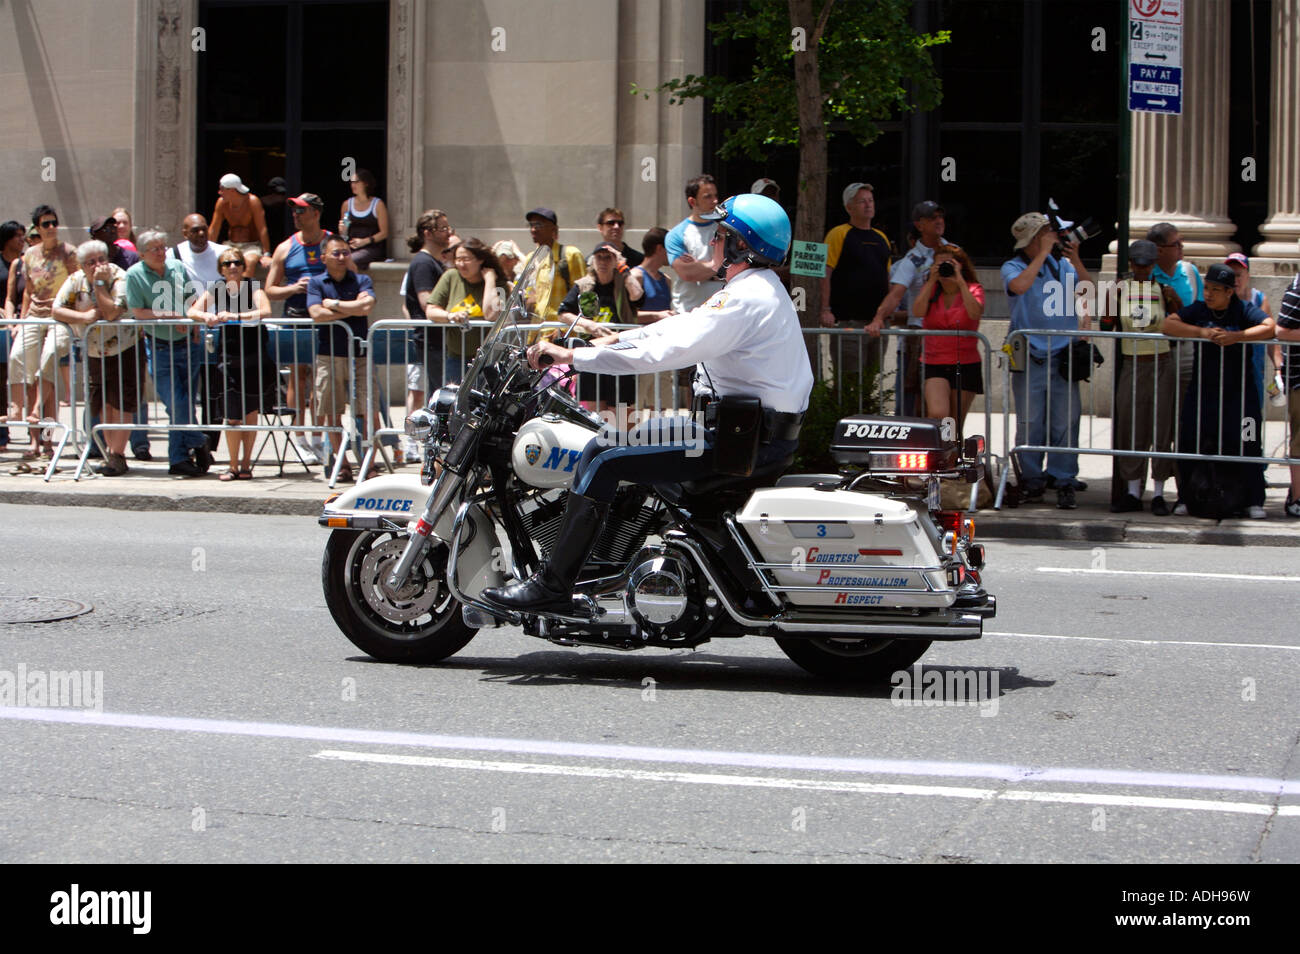 Police office on the bike Gay Pride Parade 2007 Manhattan NY USA Stock Photo